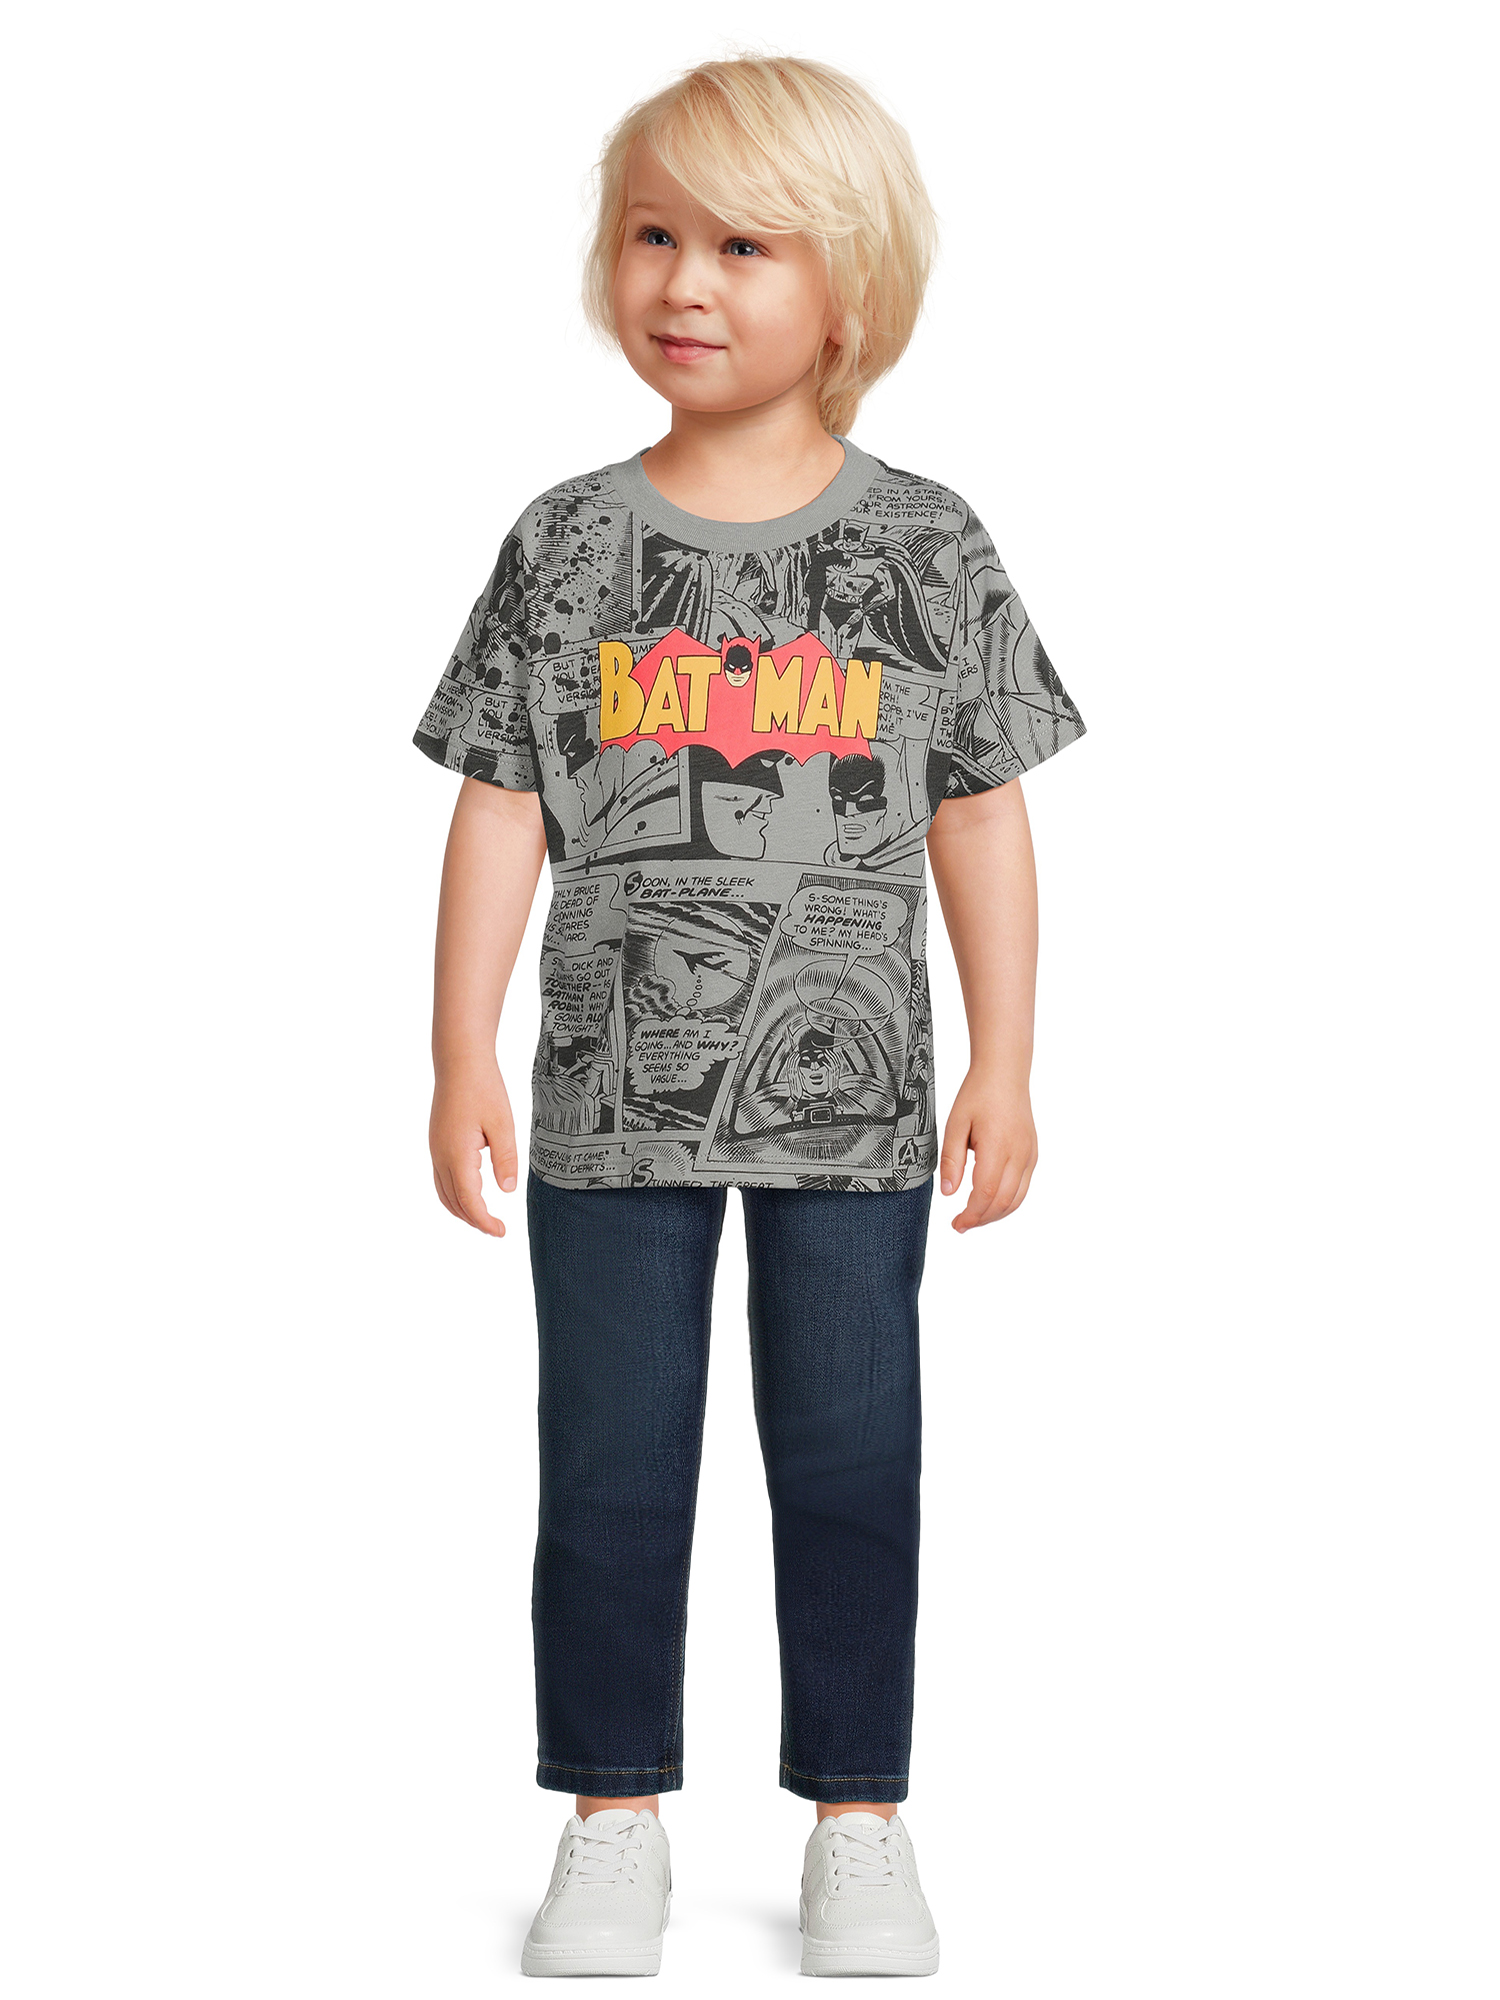 Batman Toddler Boys Comic Short Sleeve Crewneck T-Shirt, Sizes 12M-5T - image 5 of 7